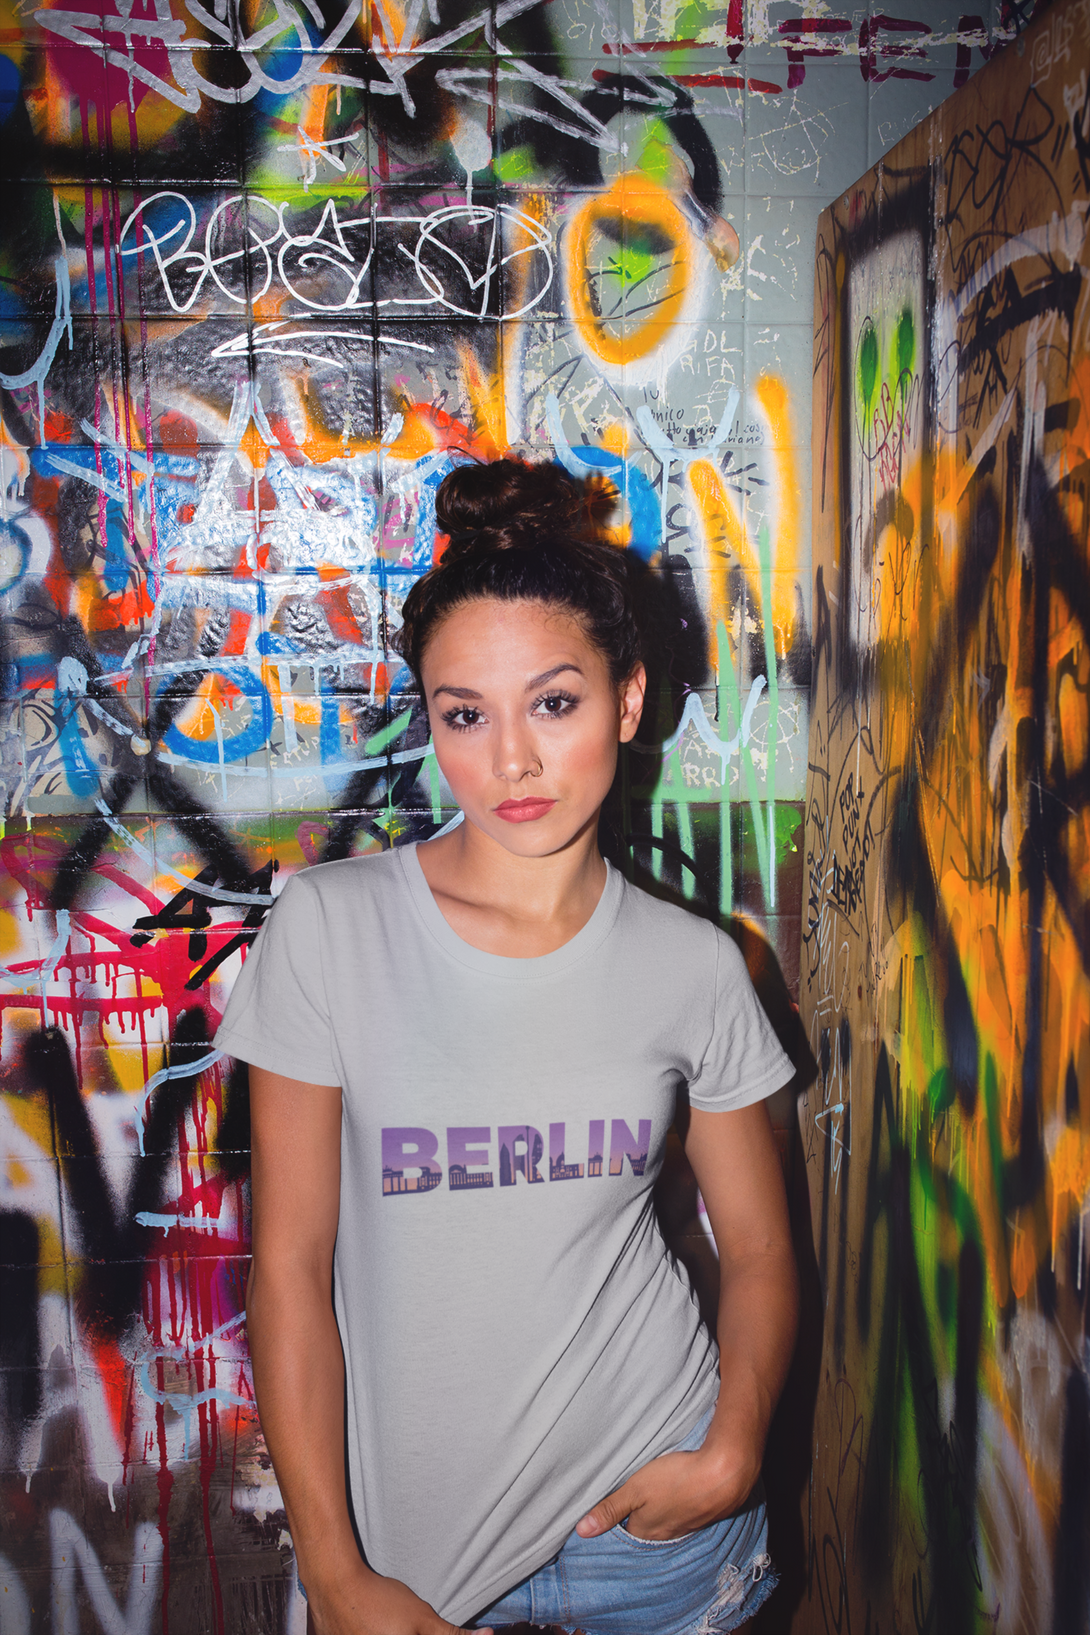 Berlin Skyline Printed T-Shirt For Women - WowWaves - 7